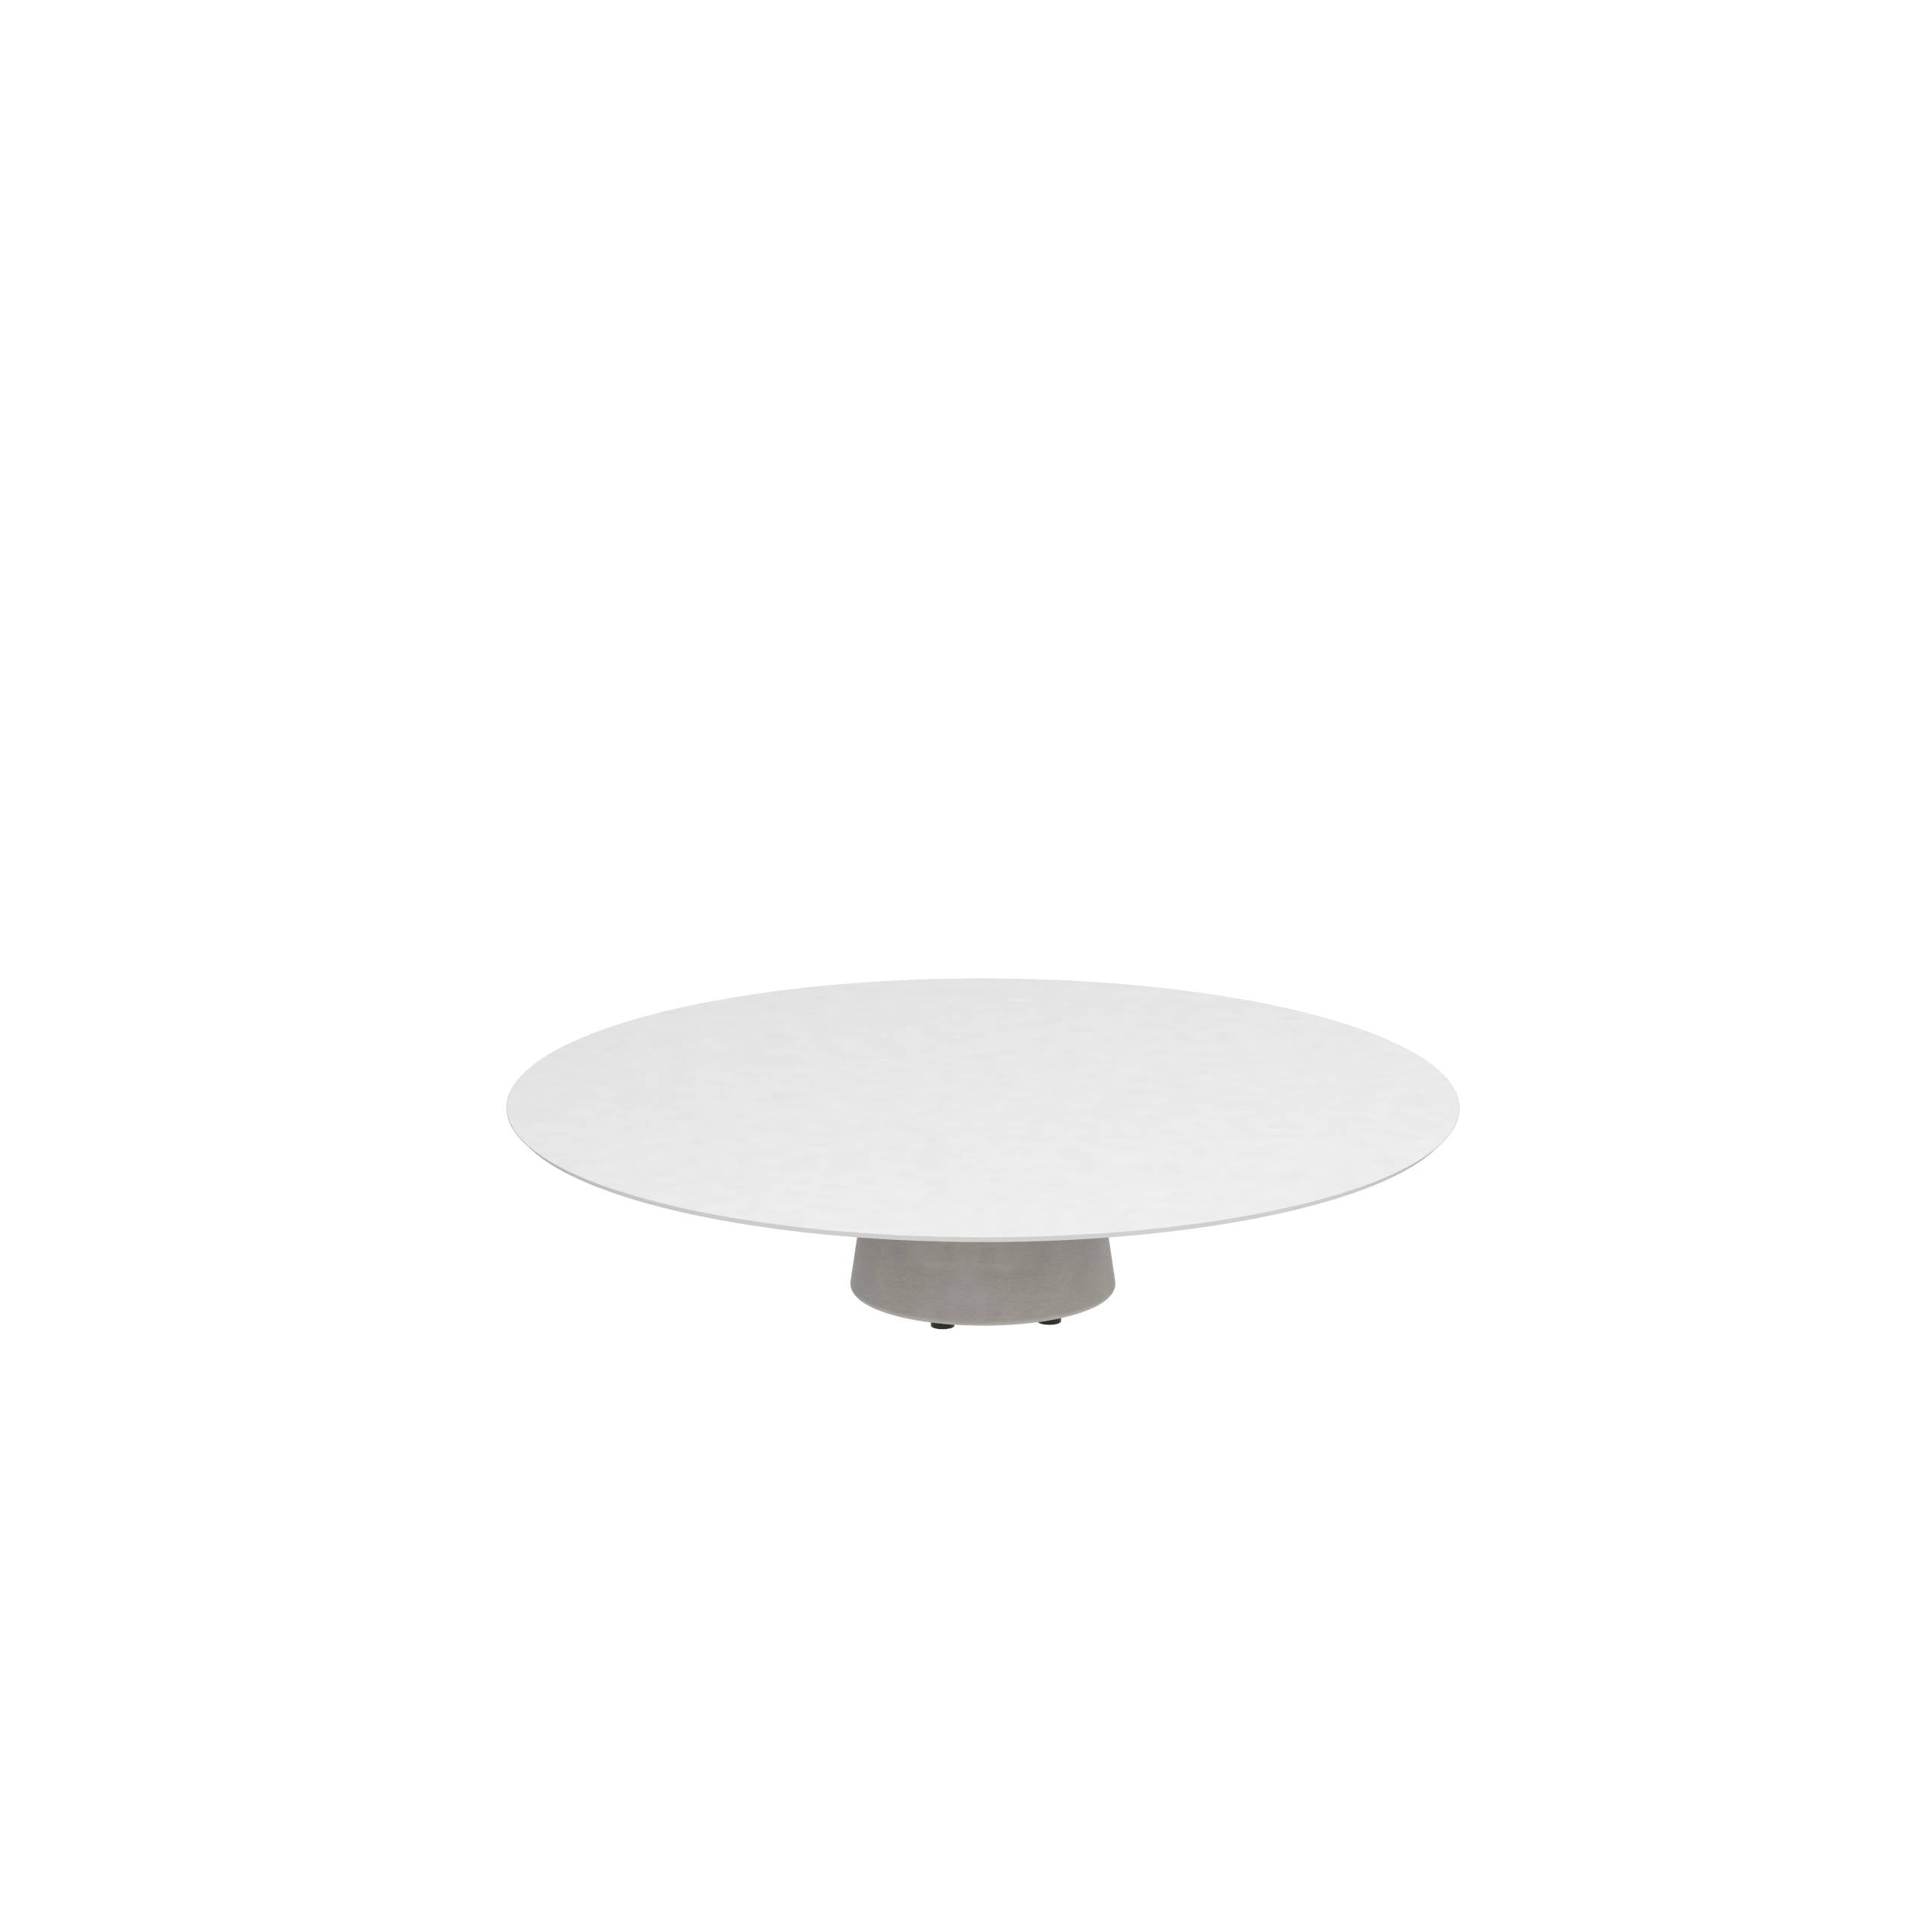 Conix Table Round Ø 160cm Low Lounge Leg Concrete Cement Grey - Tabletop Ceramic White